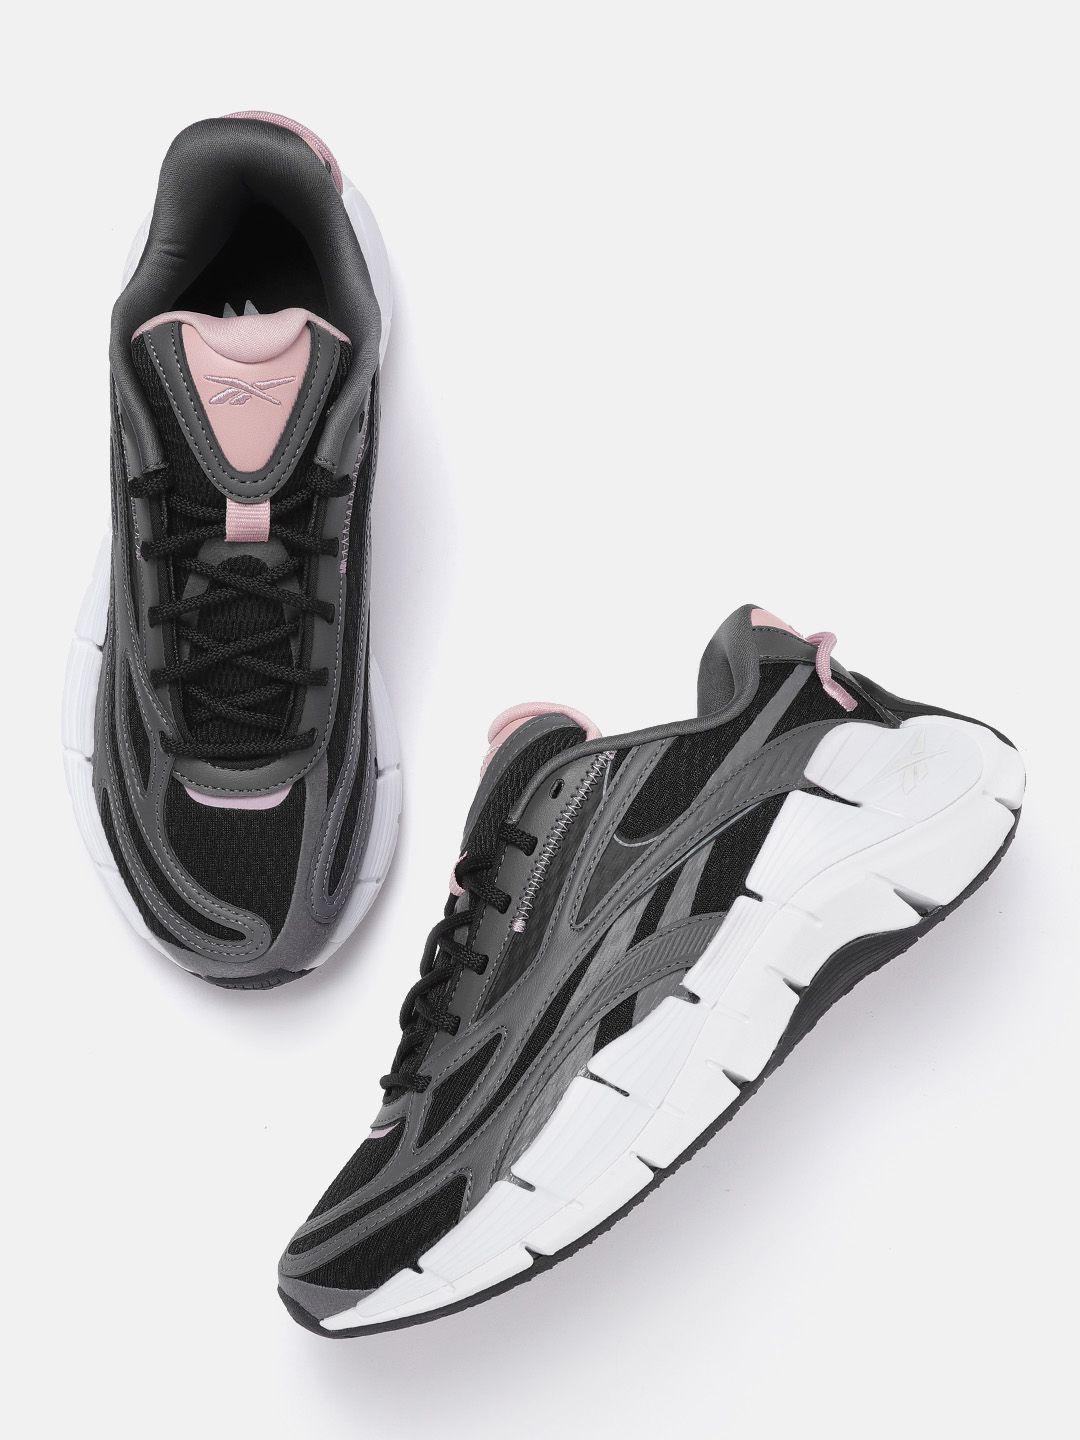 Reebok Women Black Grey Woven Design Zig Kinetica 2.5 Running Shoes Price in India